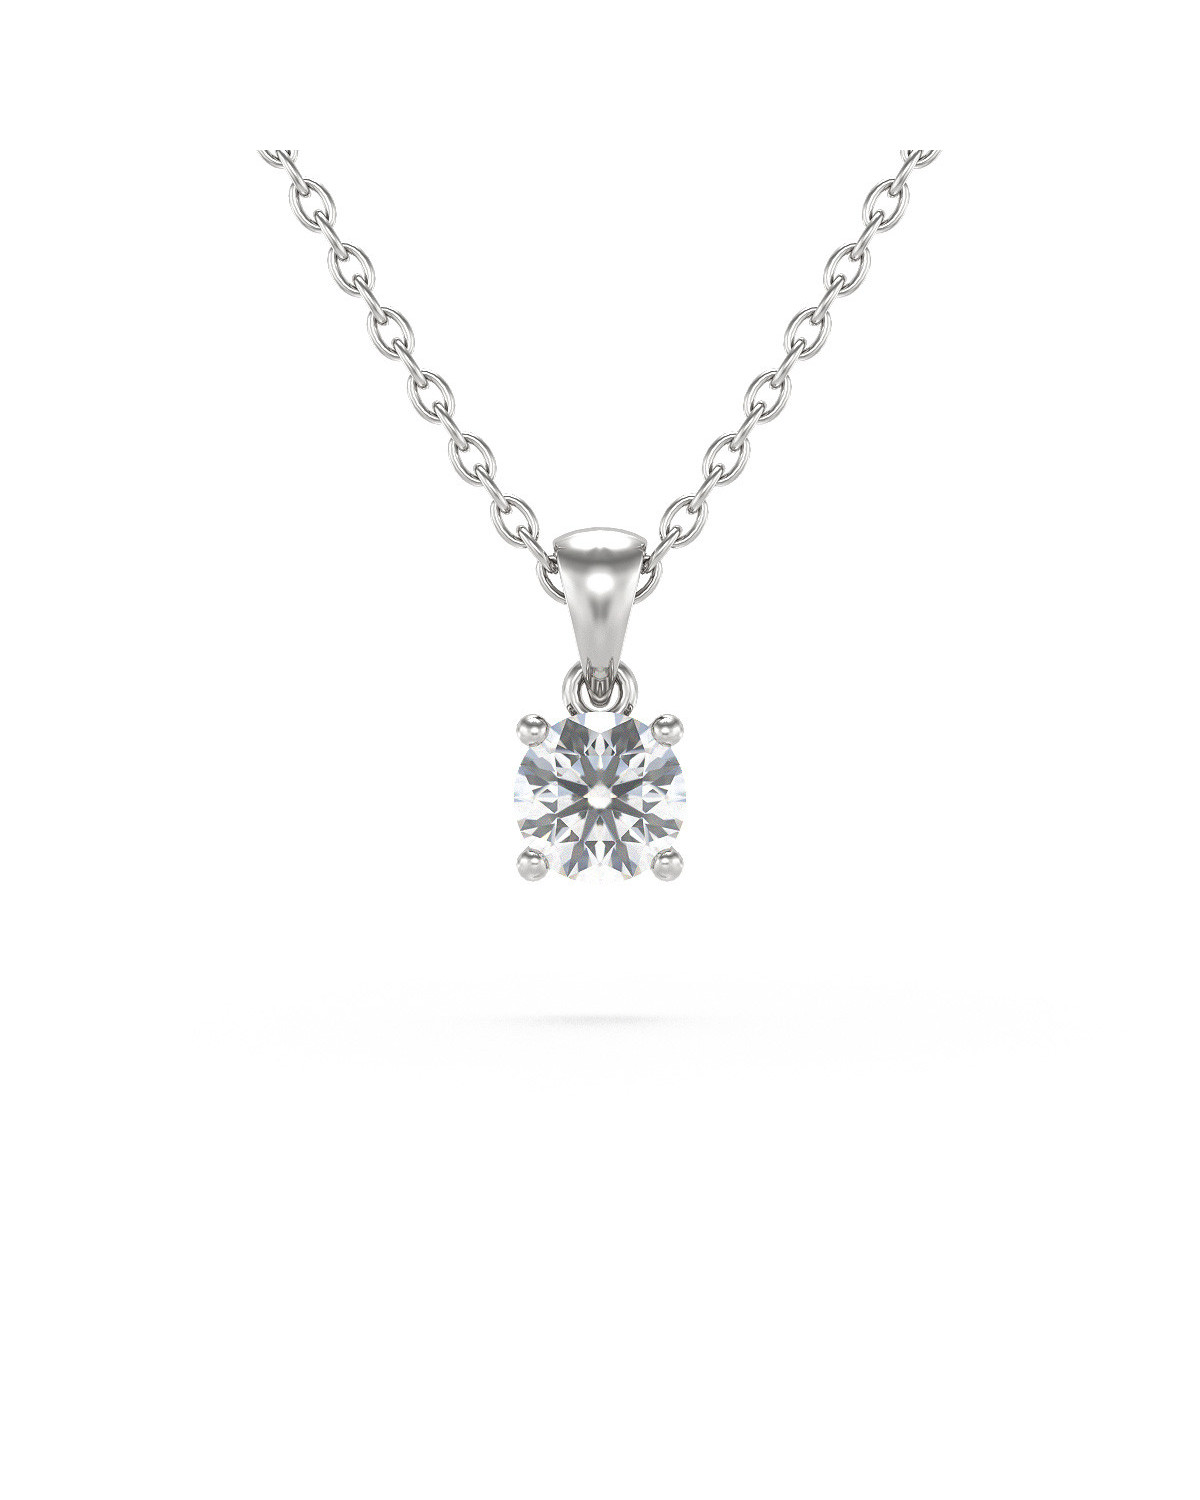 925 Silver Diamond Necklace Pendant Chain included